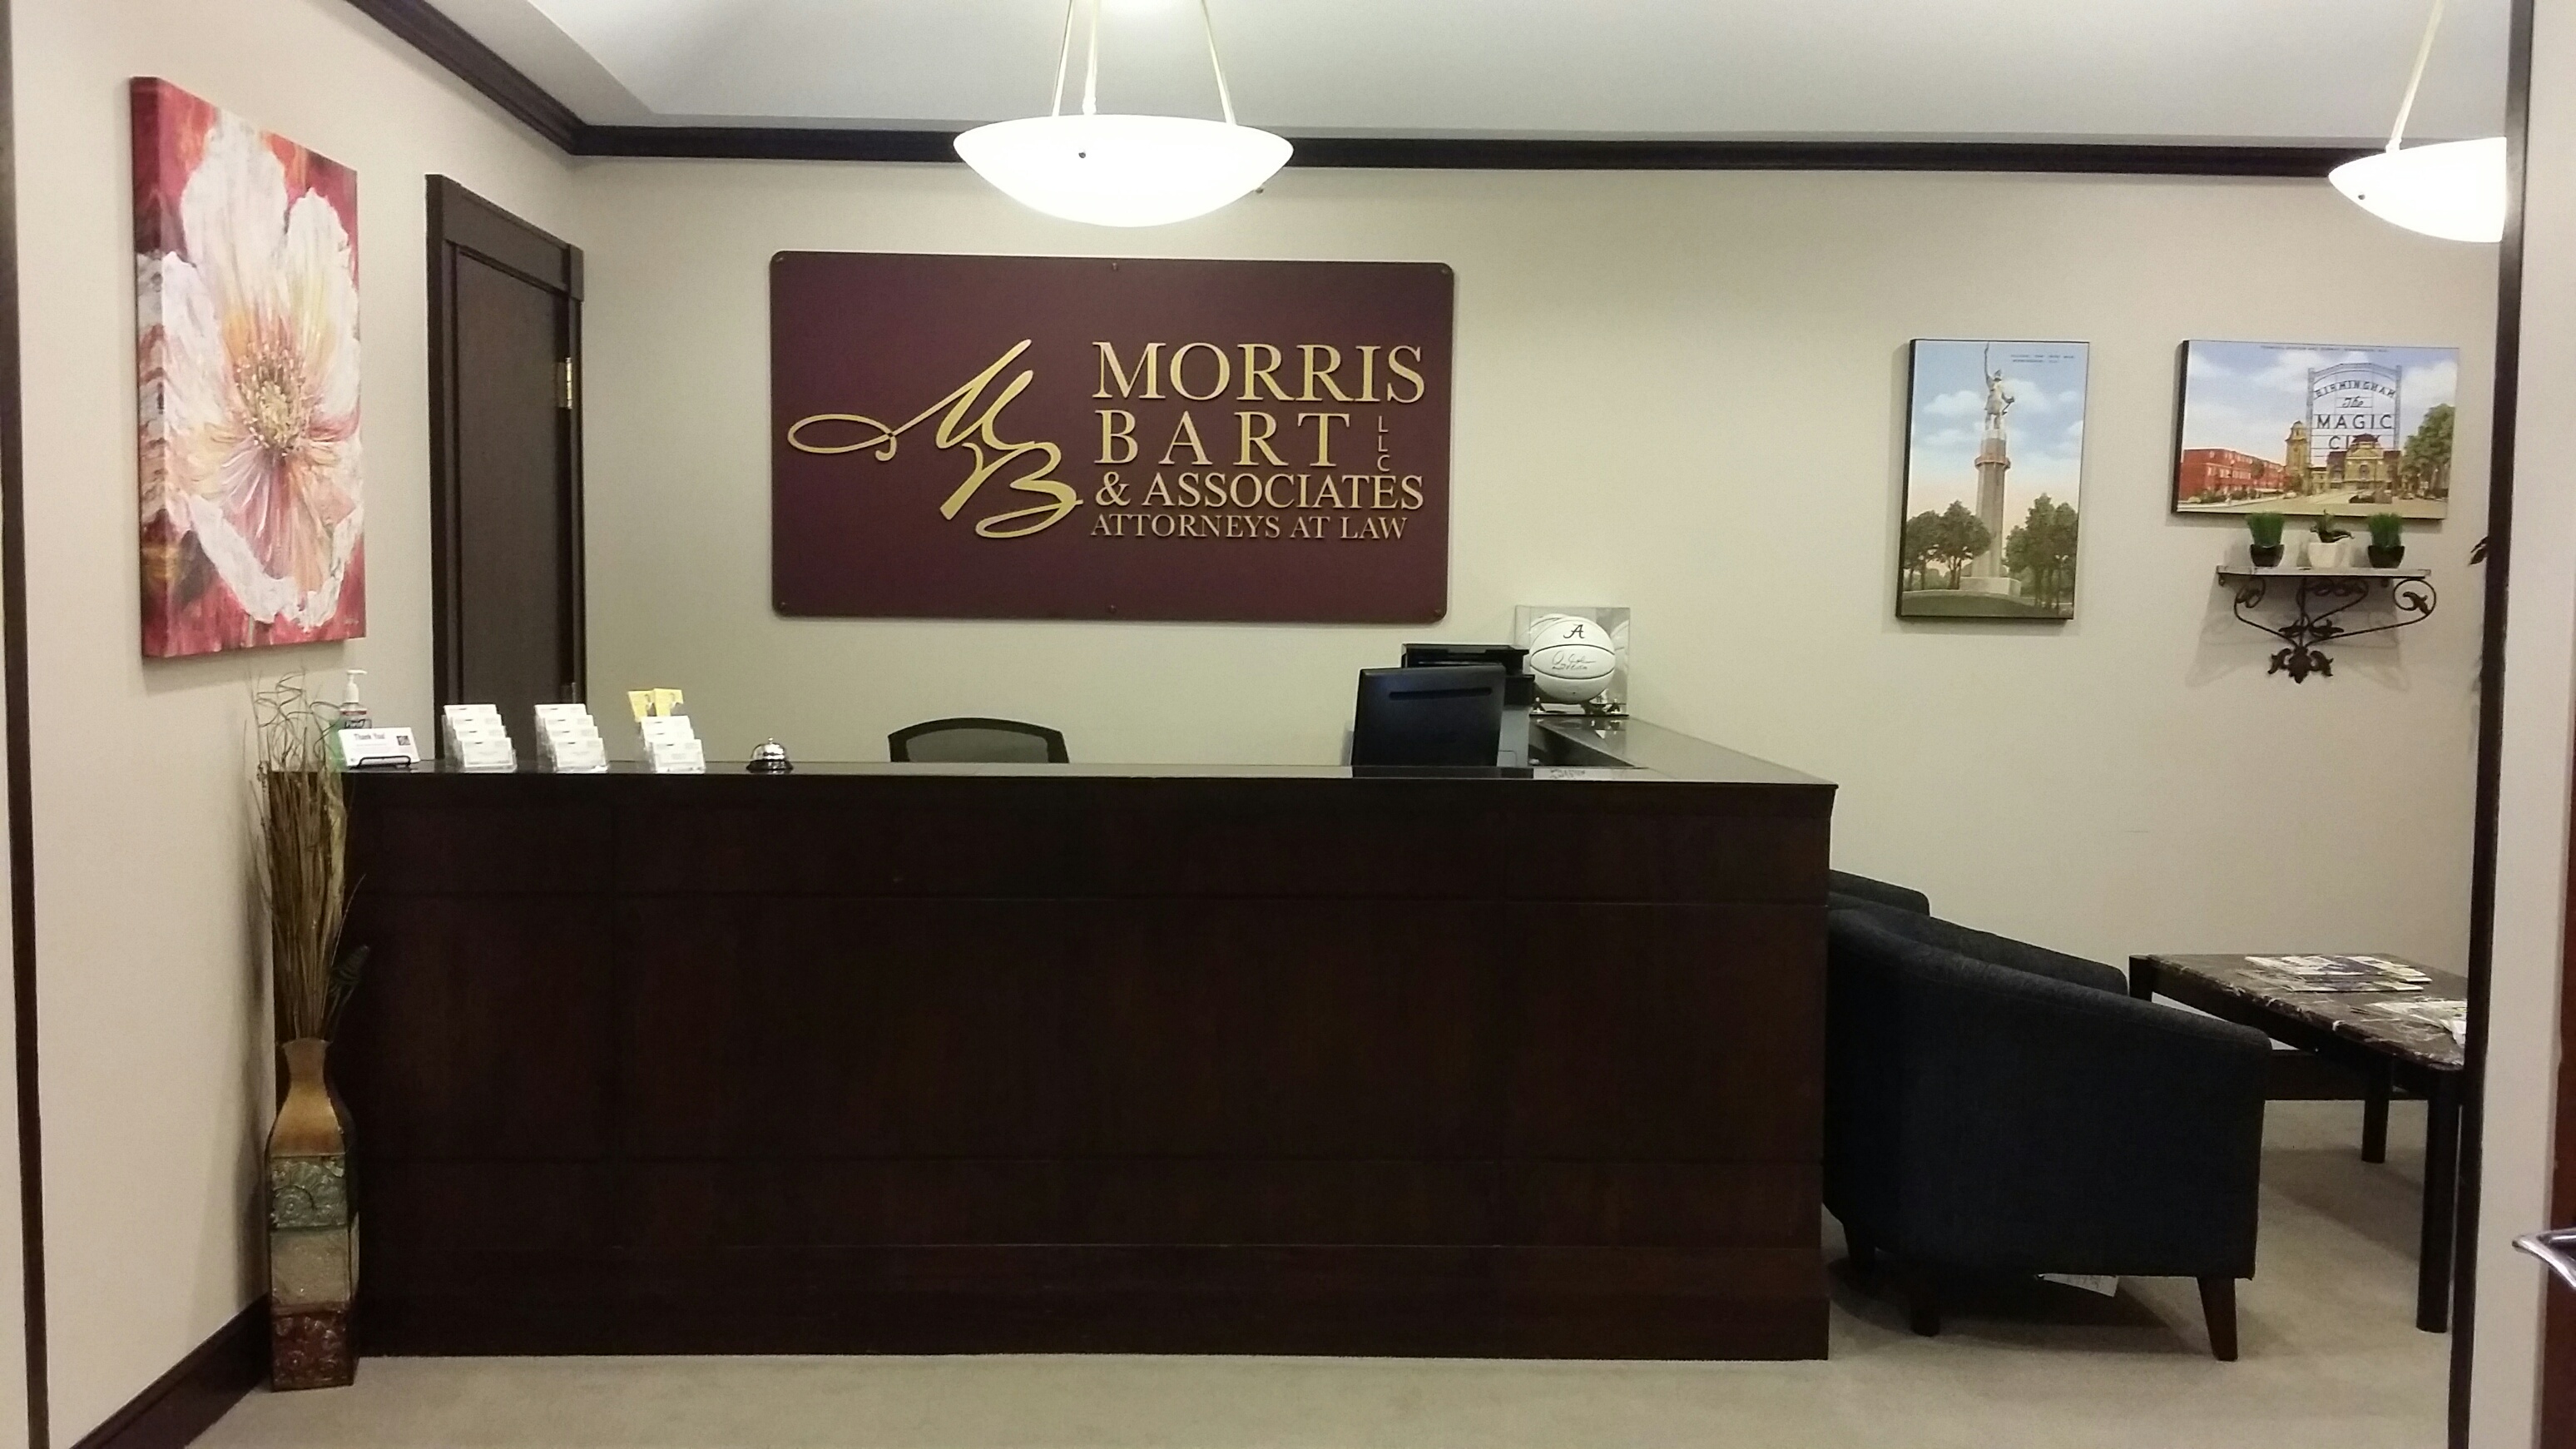 The front desk of Morris Bart's Birmingham office.